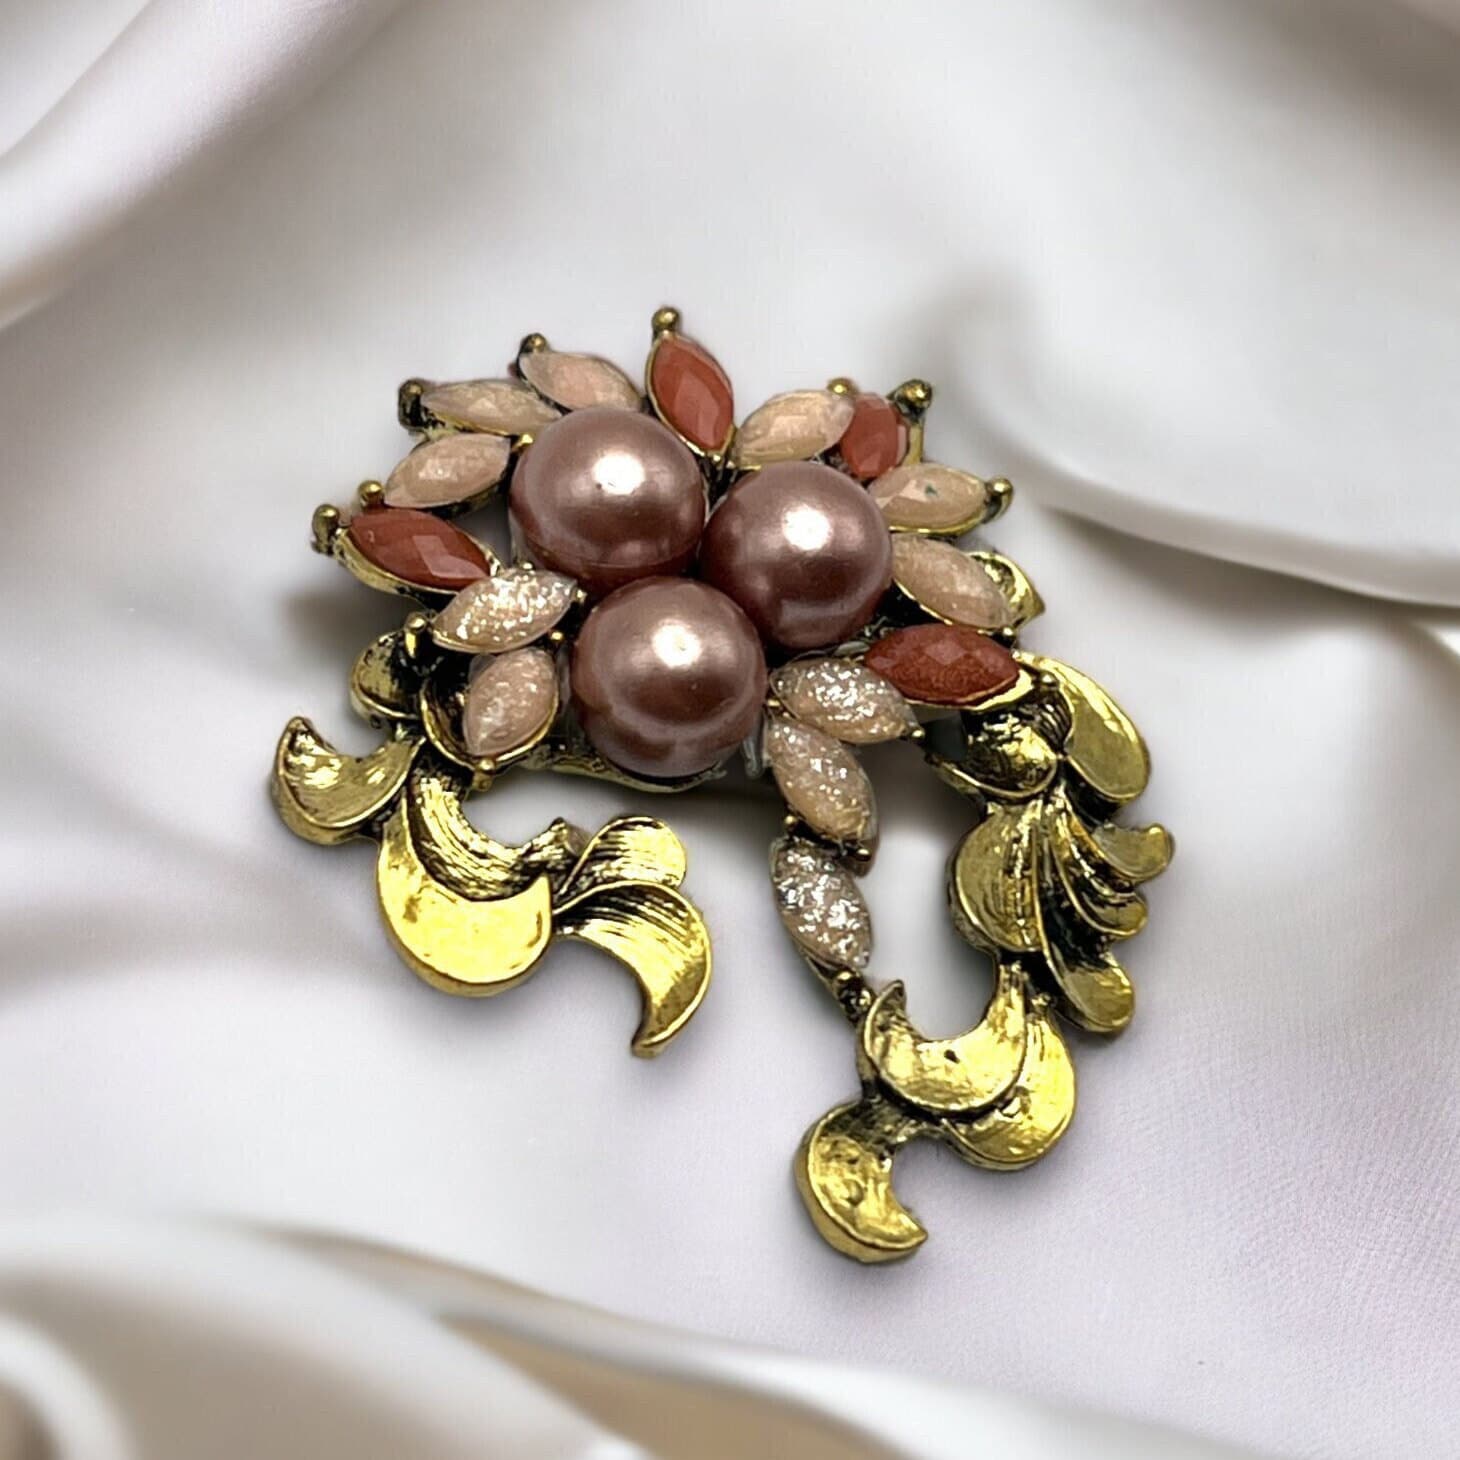 AUGTIGER Brooch Pins for Women Girls Fashion Flower Crystal Rhinestone Pearl Jewelry